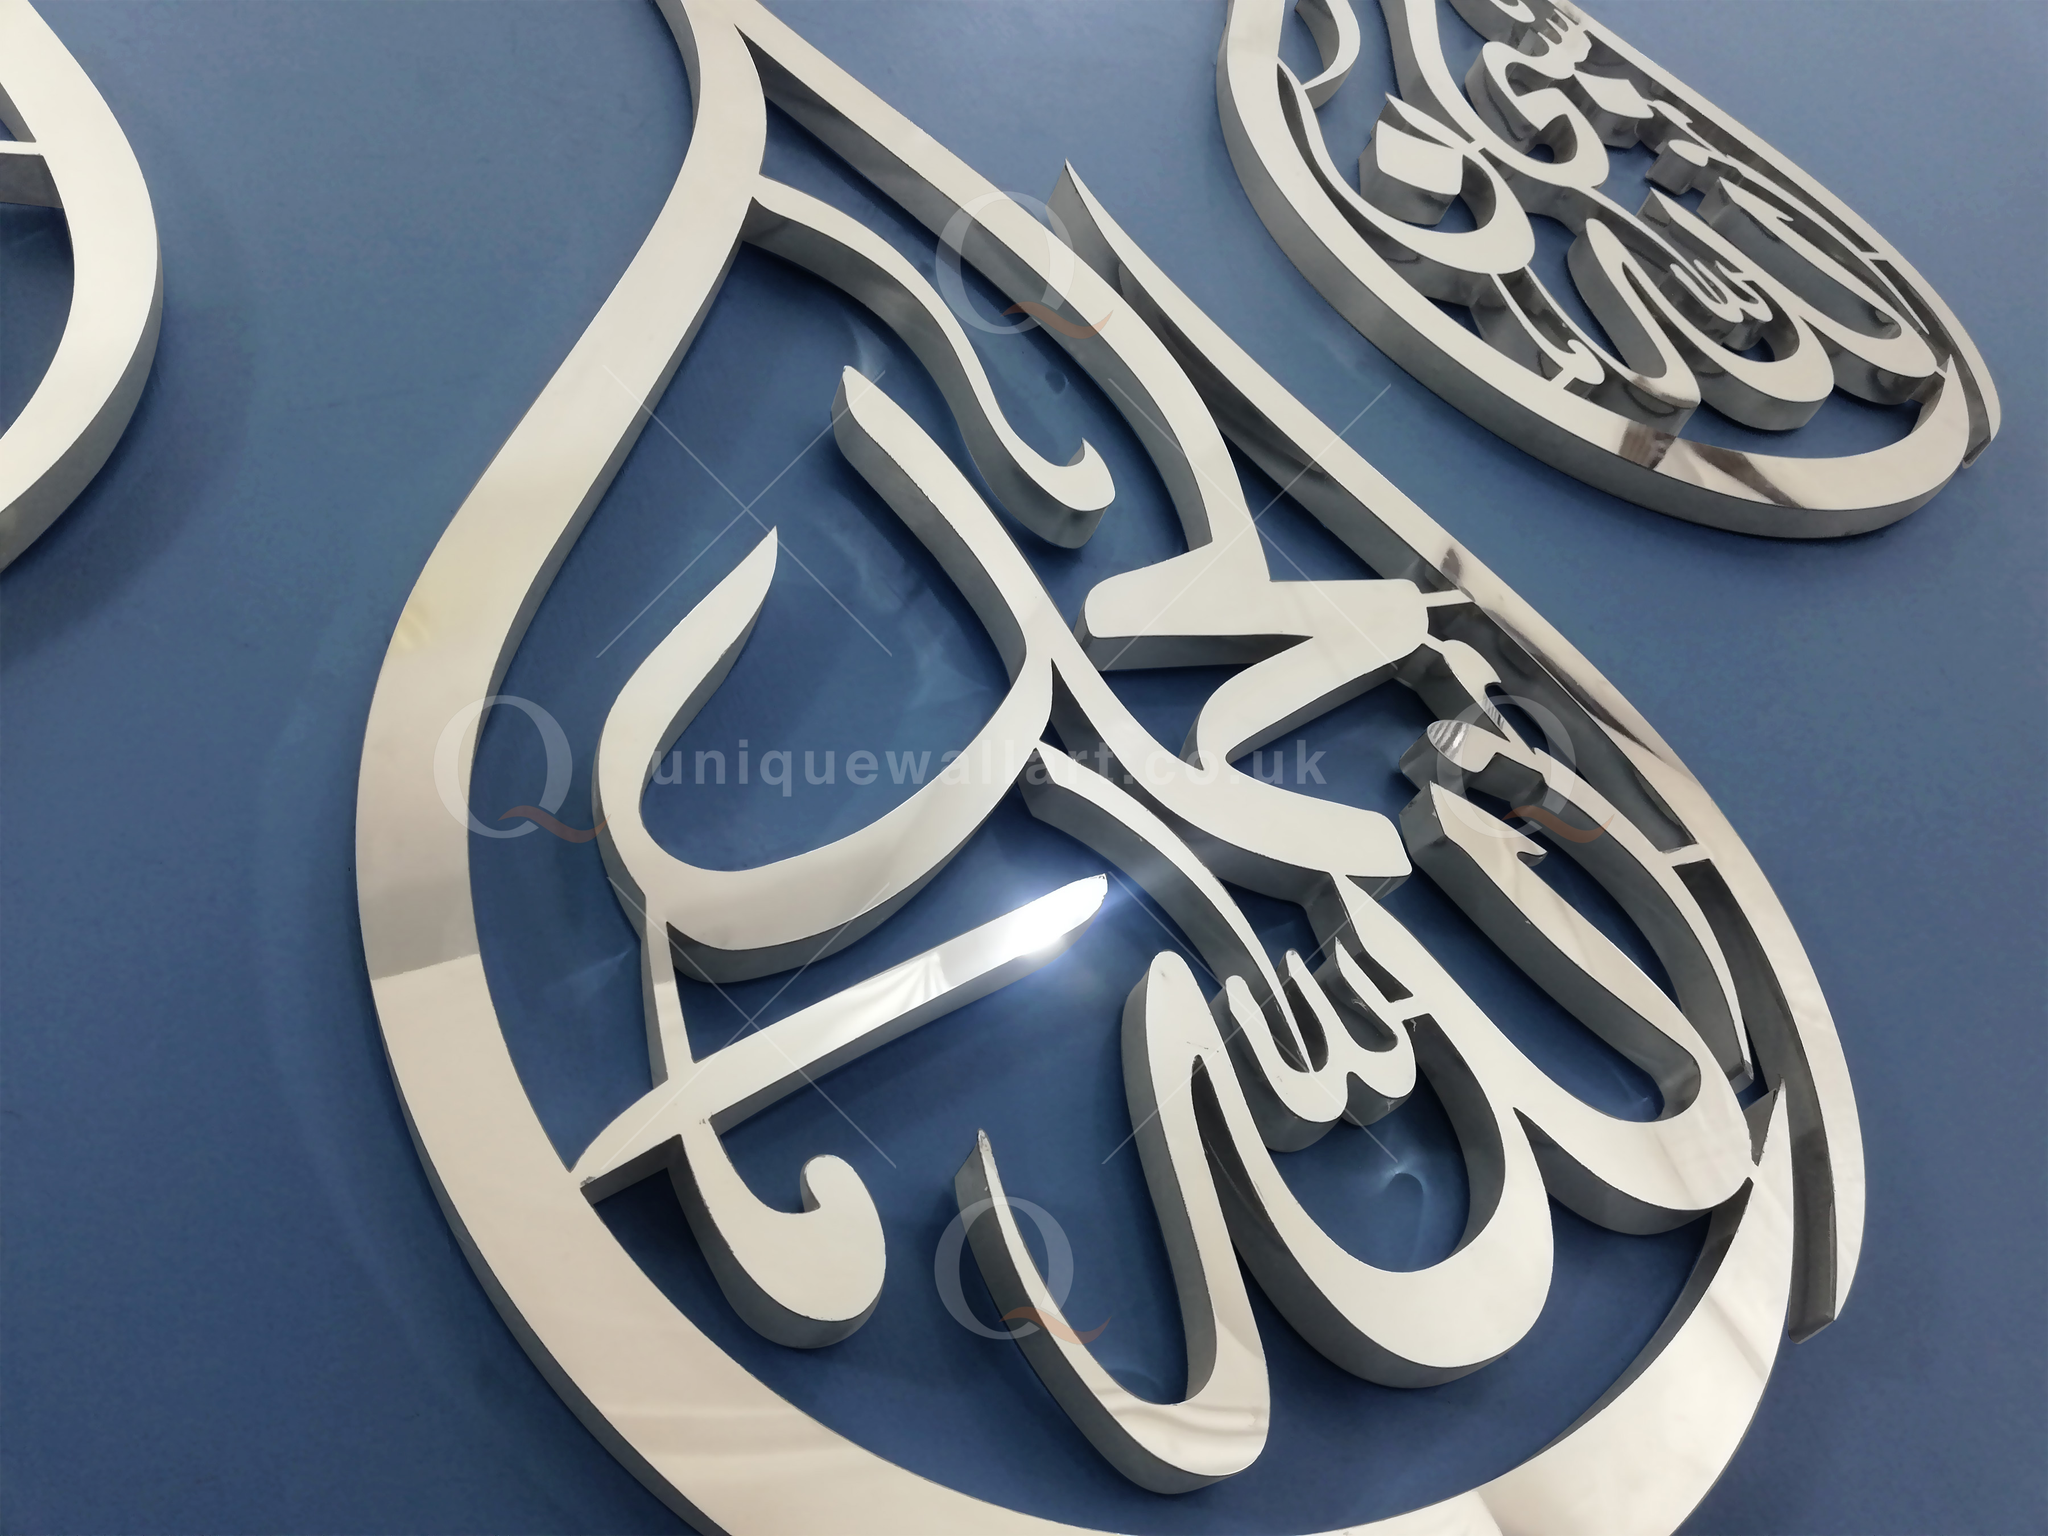 Tear Drop Tasbeeh Set 3D Metal Islamic calligraphy handmade Wall Art Decor